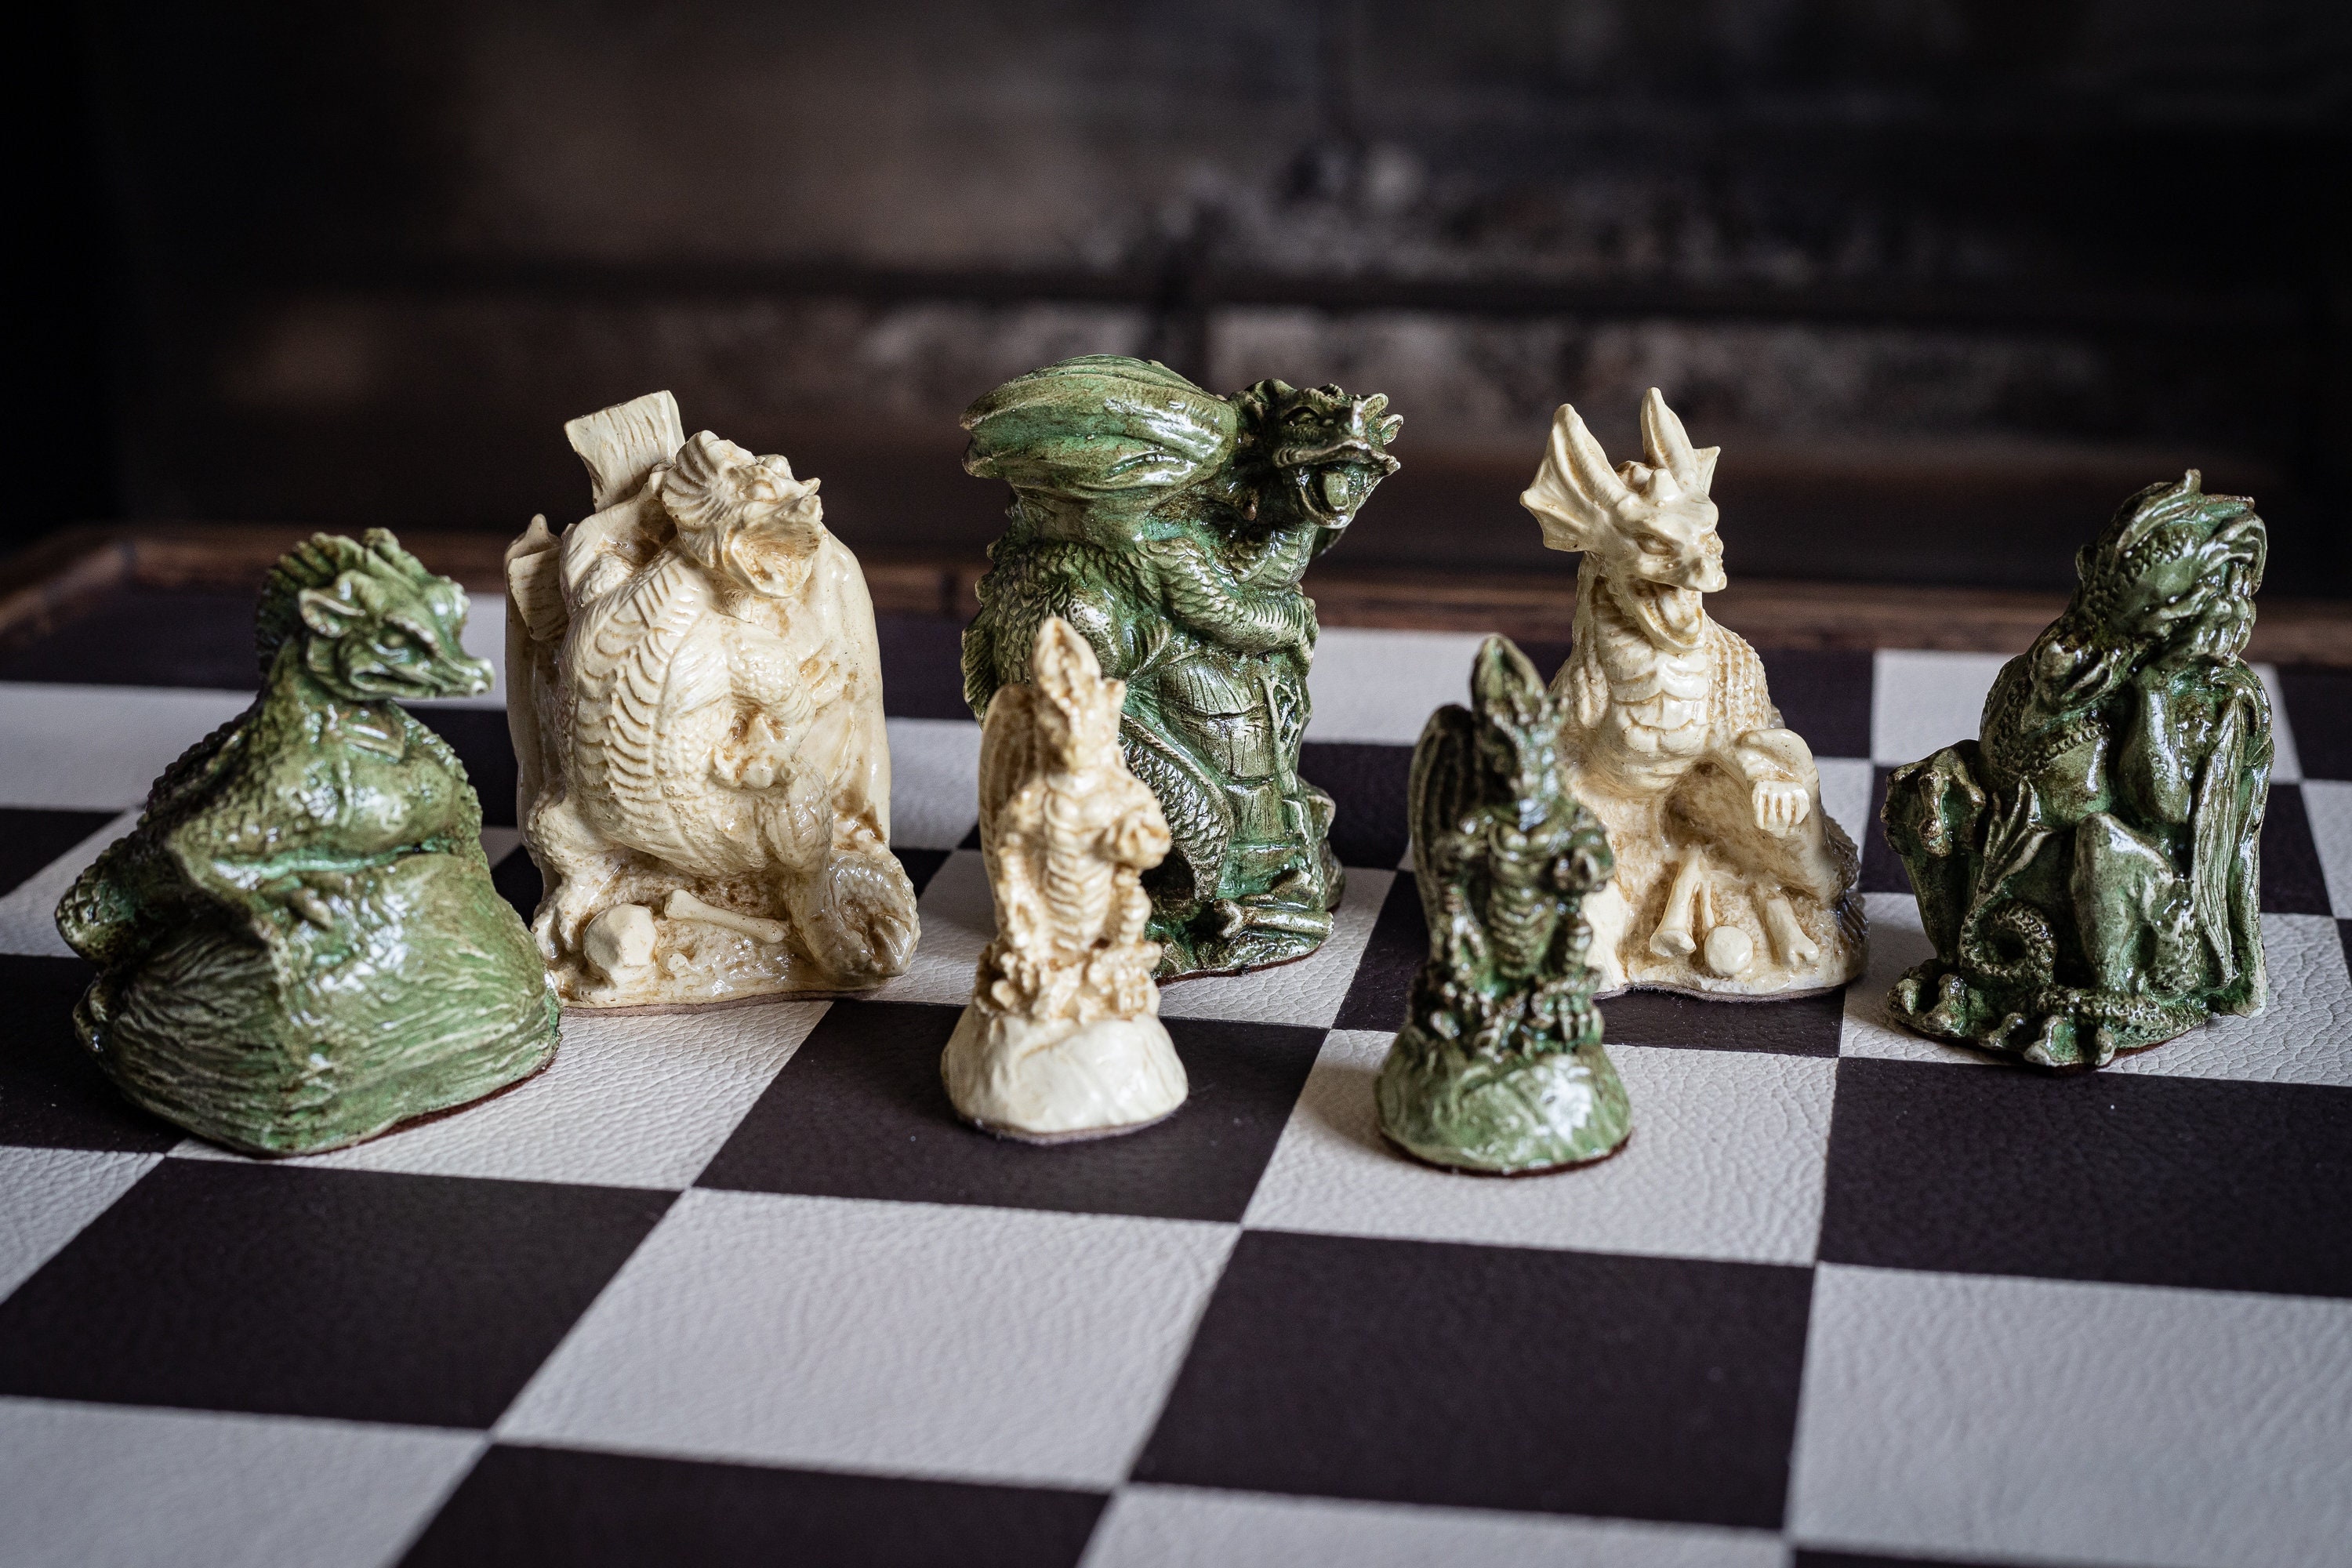 Harry Potter Dragon Chess Set by De Agostini- Dragons, Castle